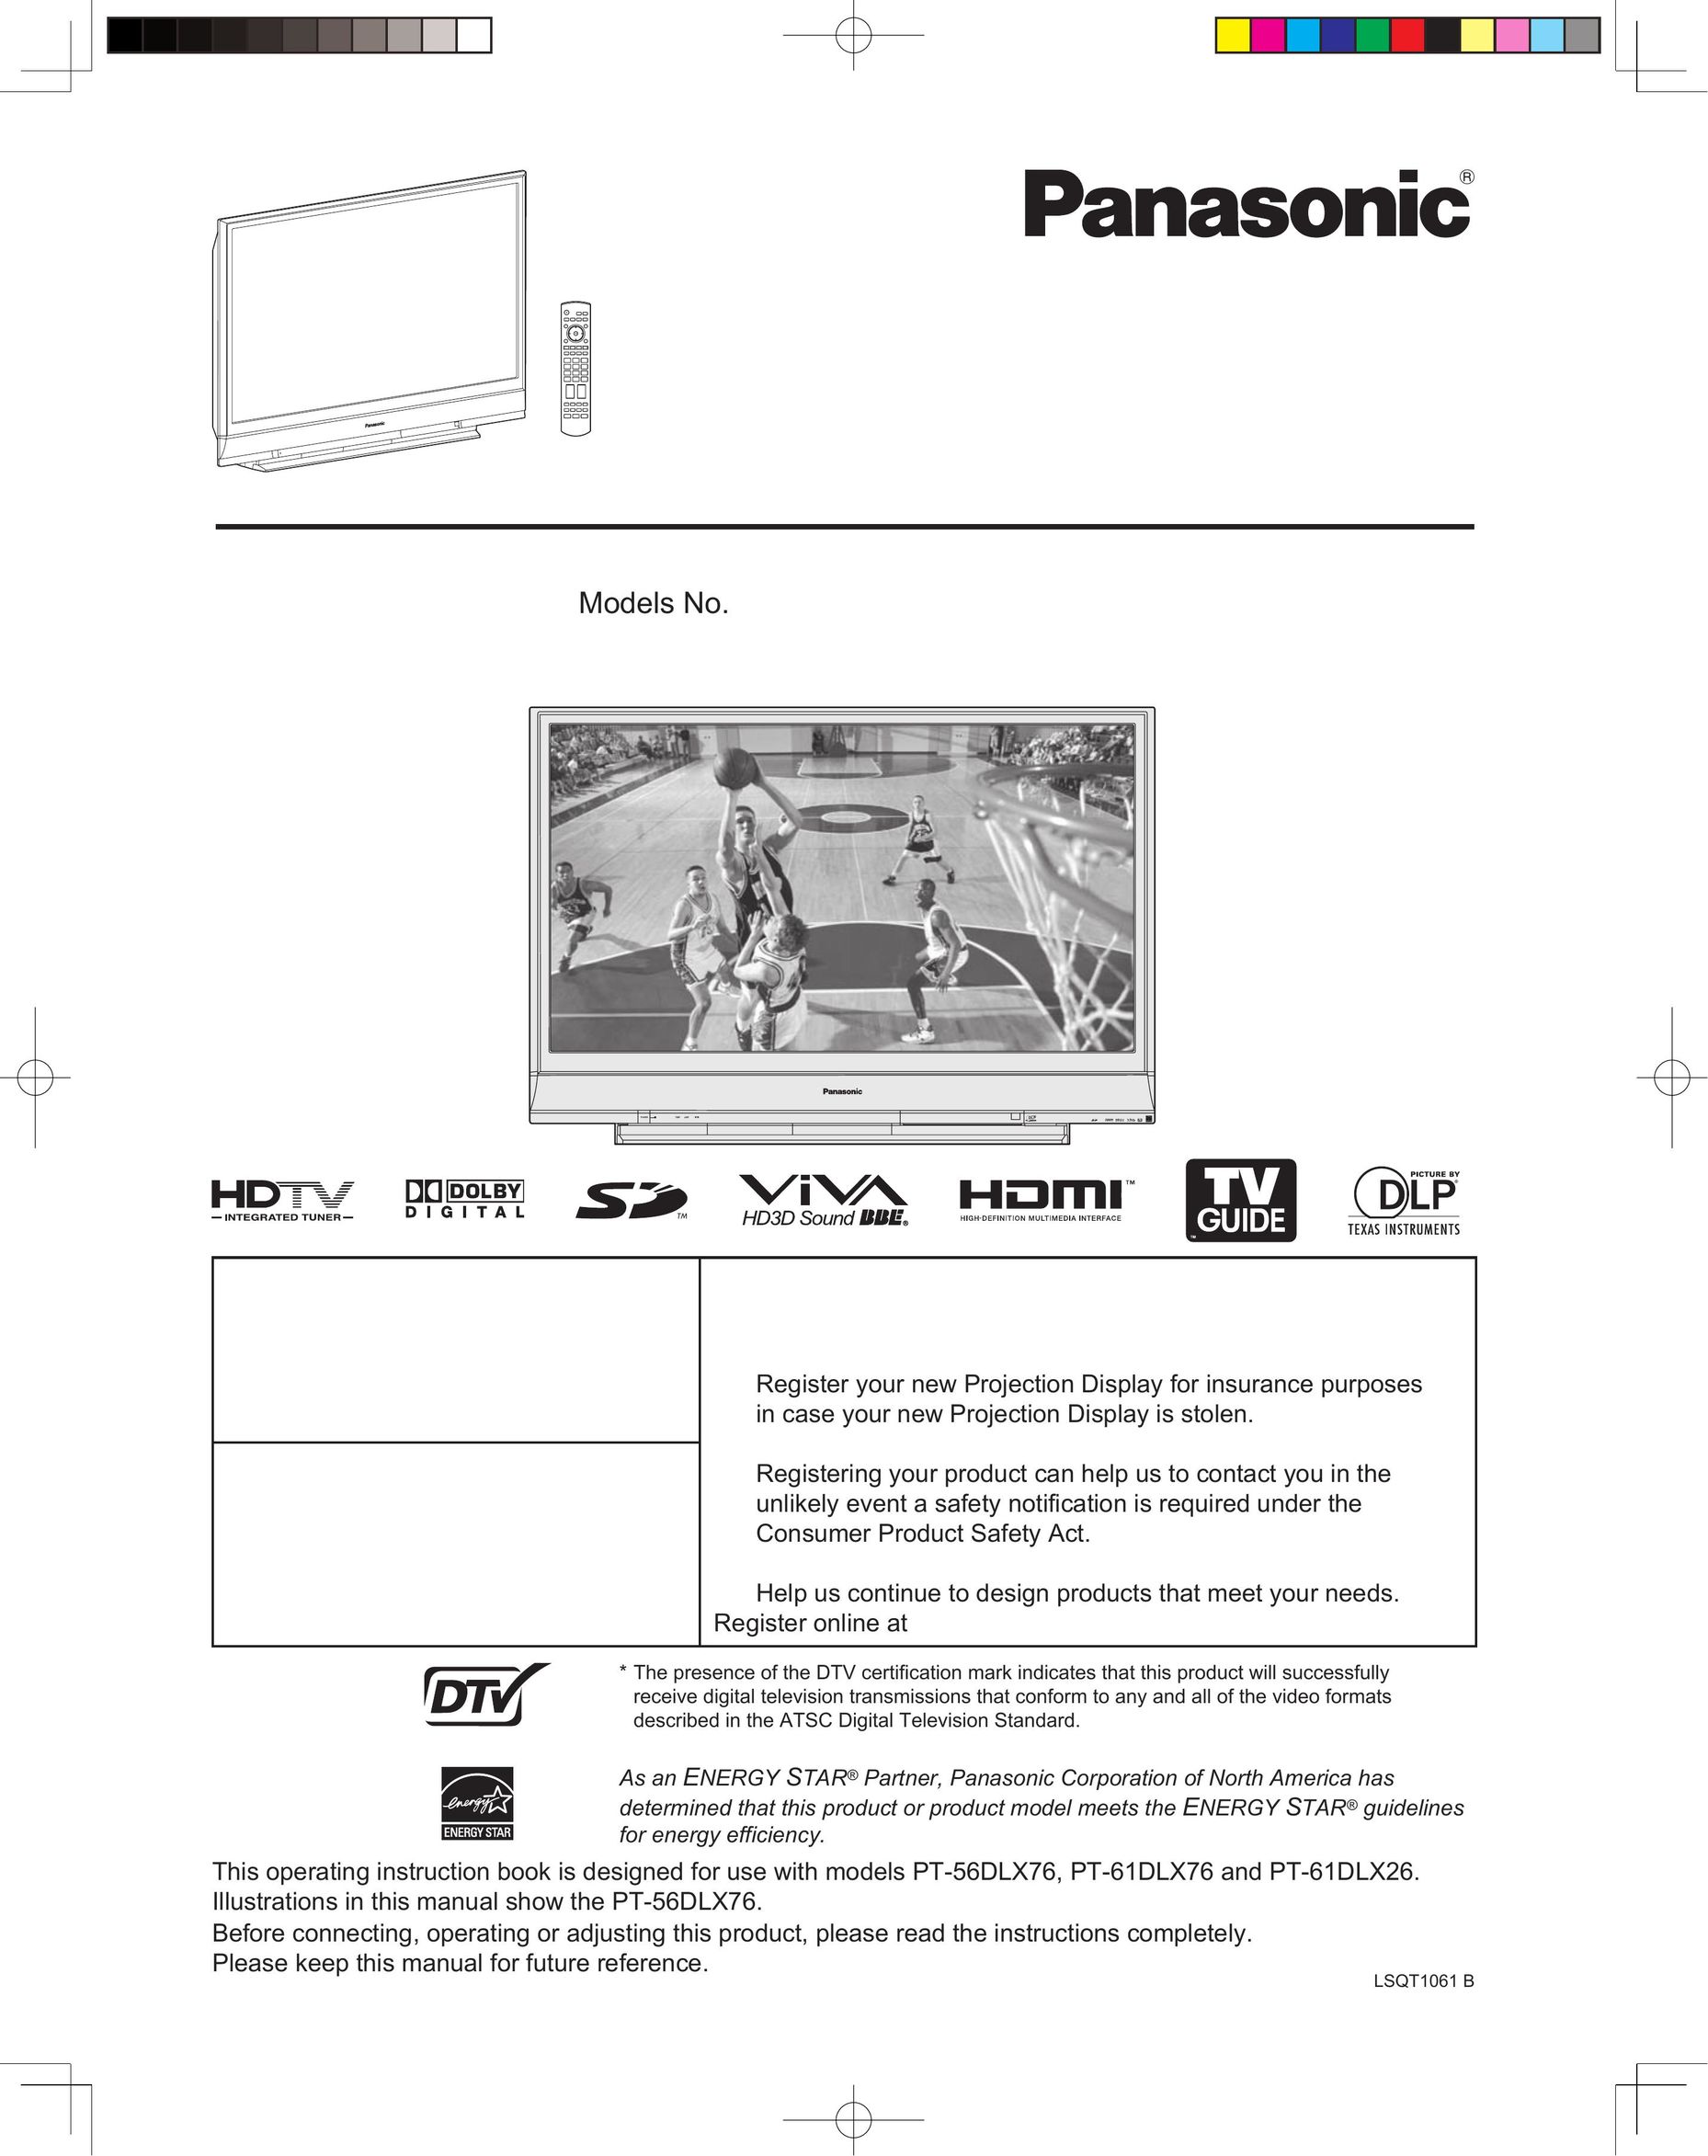 Panasonic PT 61DLX76 Projection Television User Manual